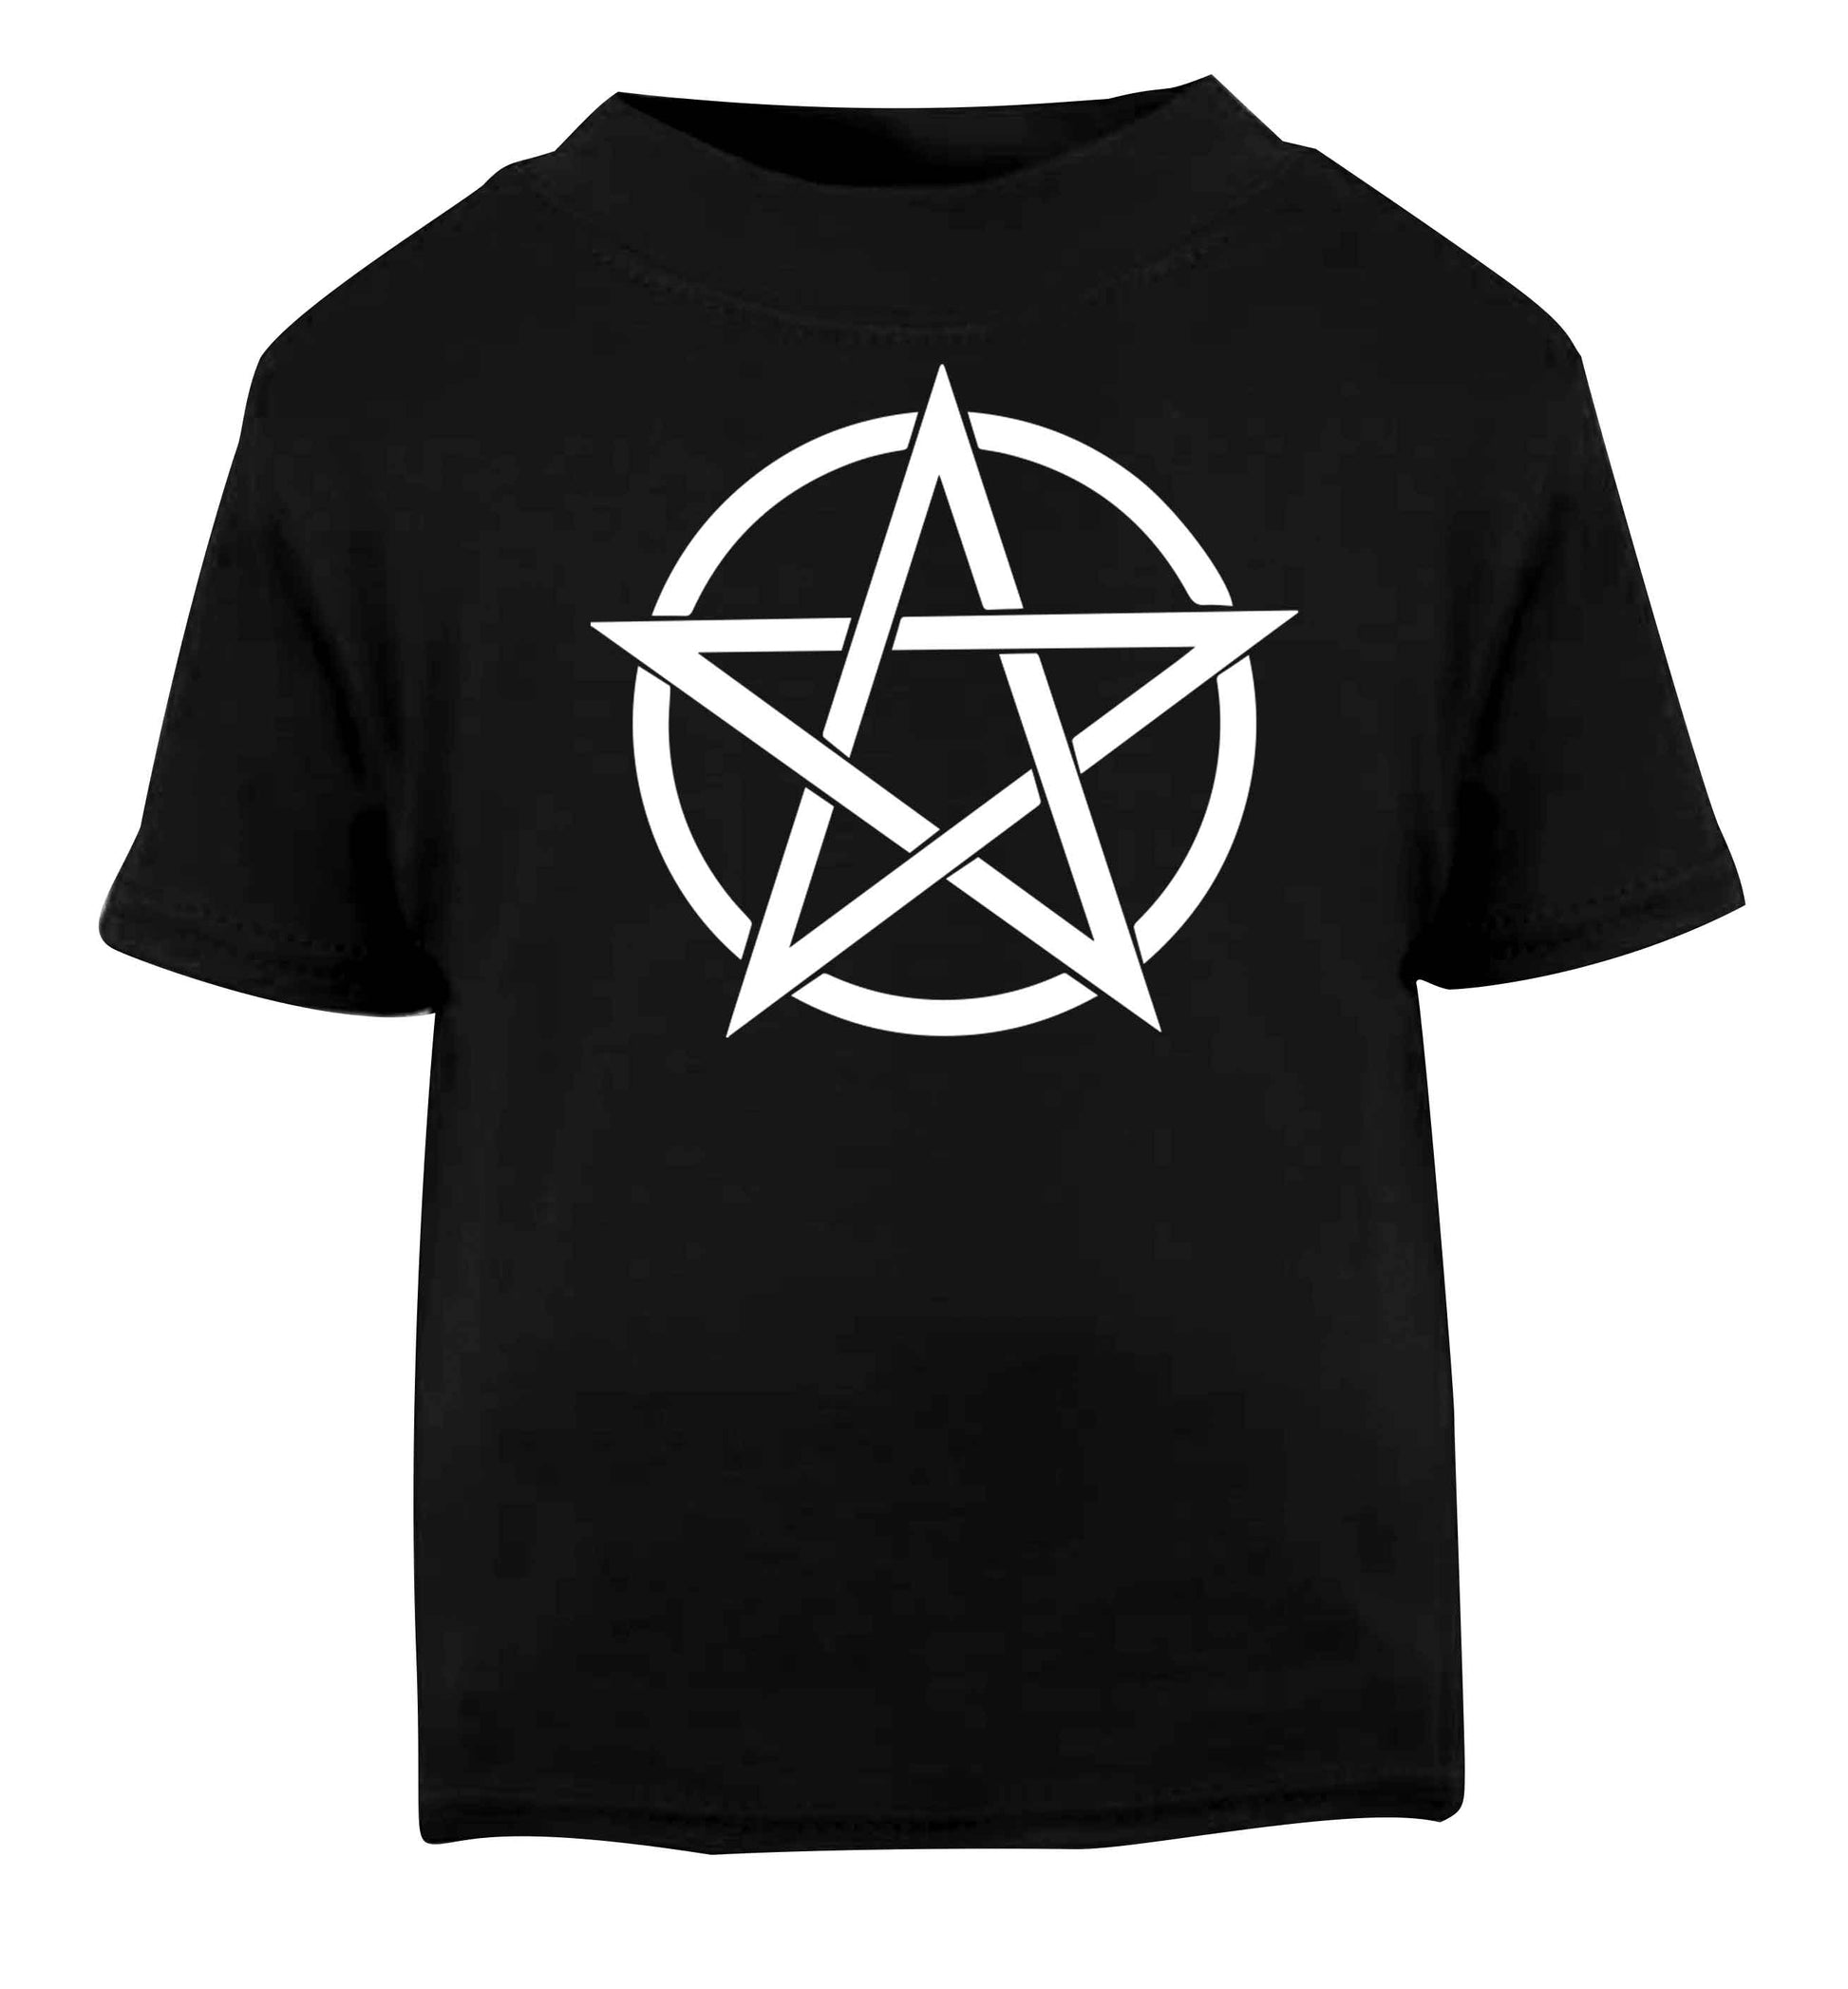 Pentagram symbol Black baby toddler Tshirt 2 years